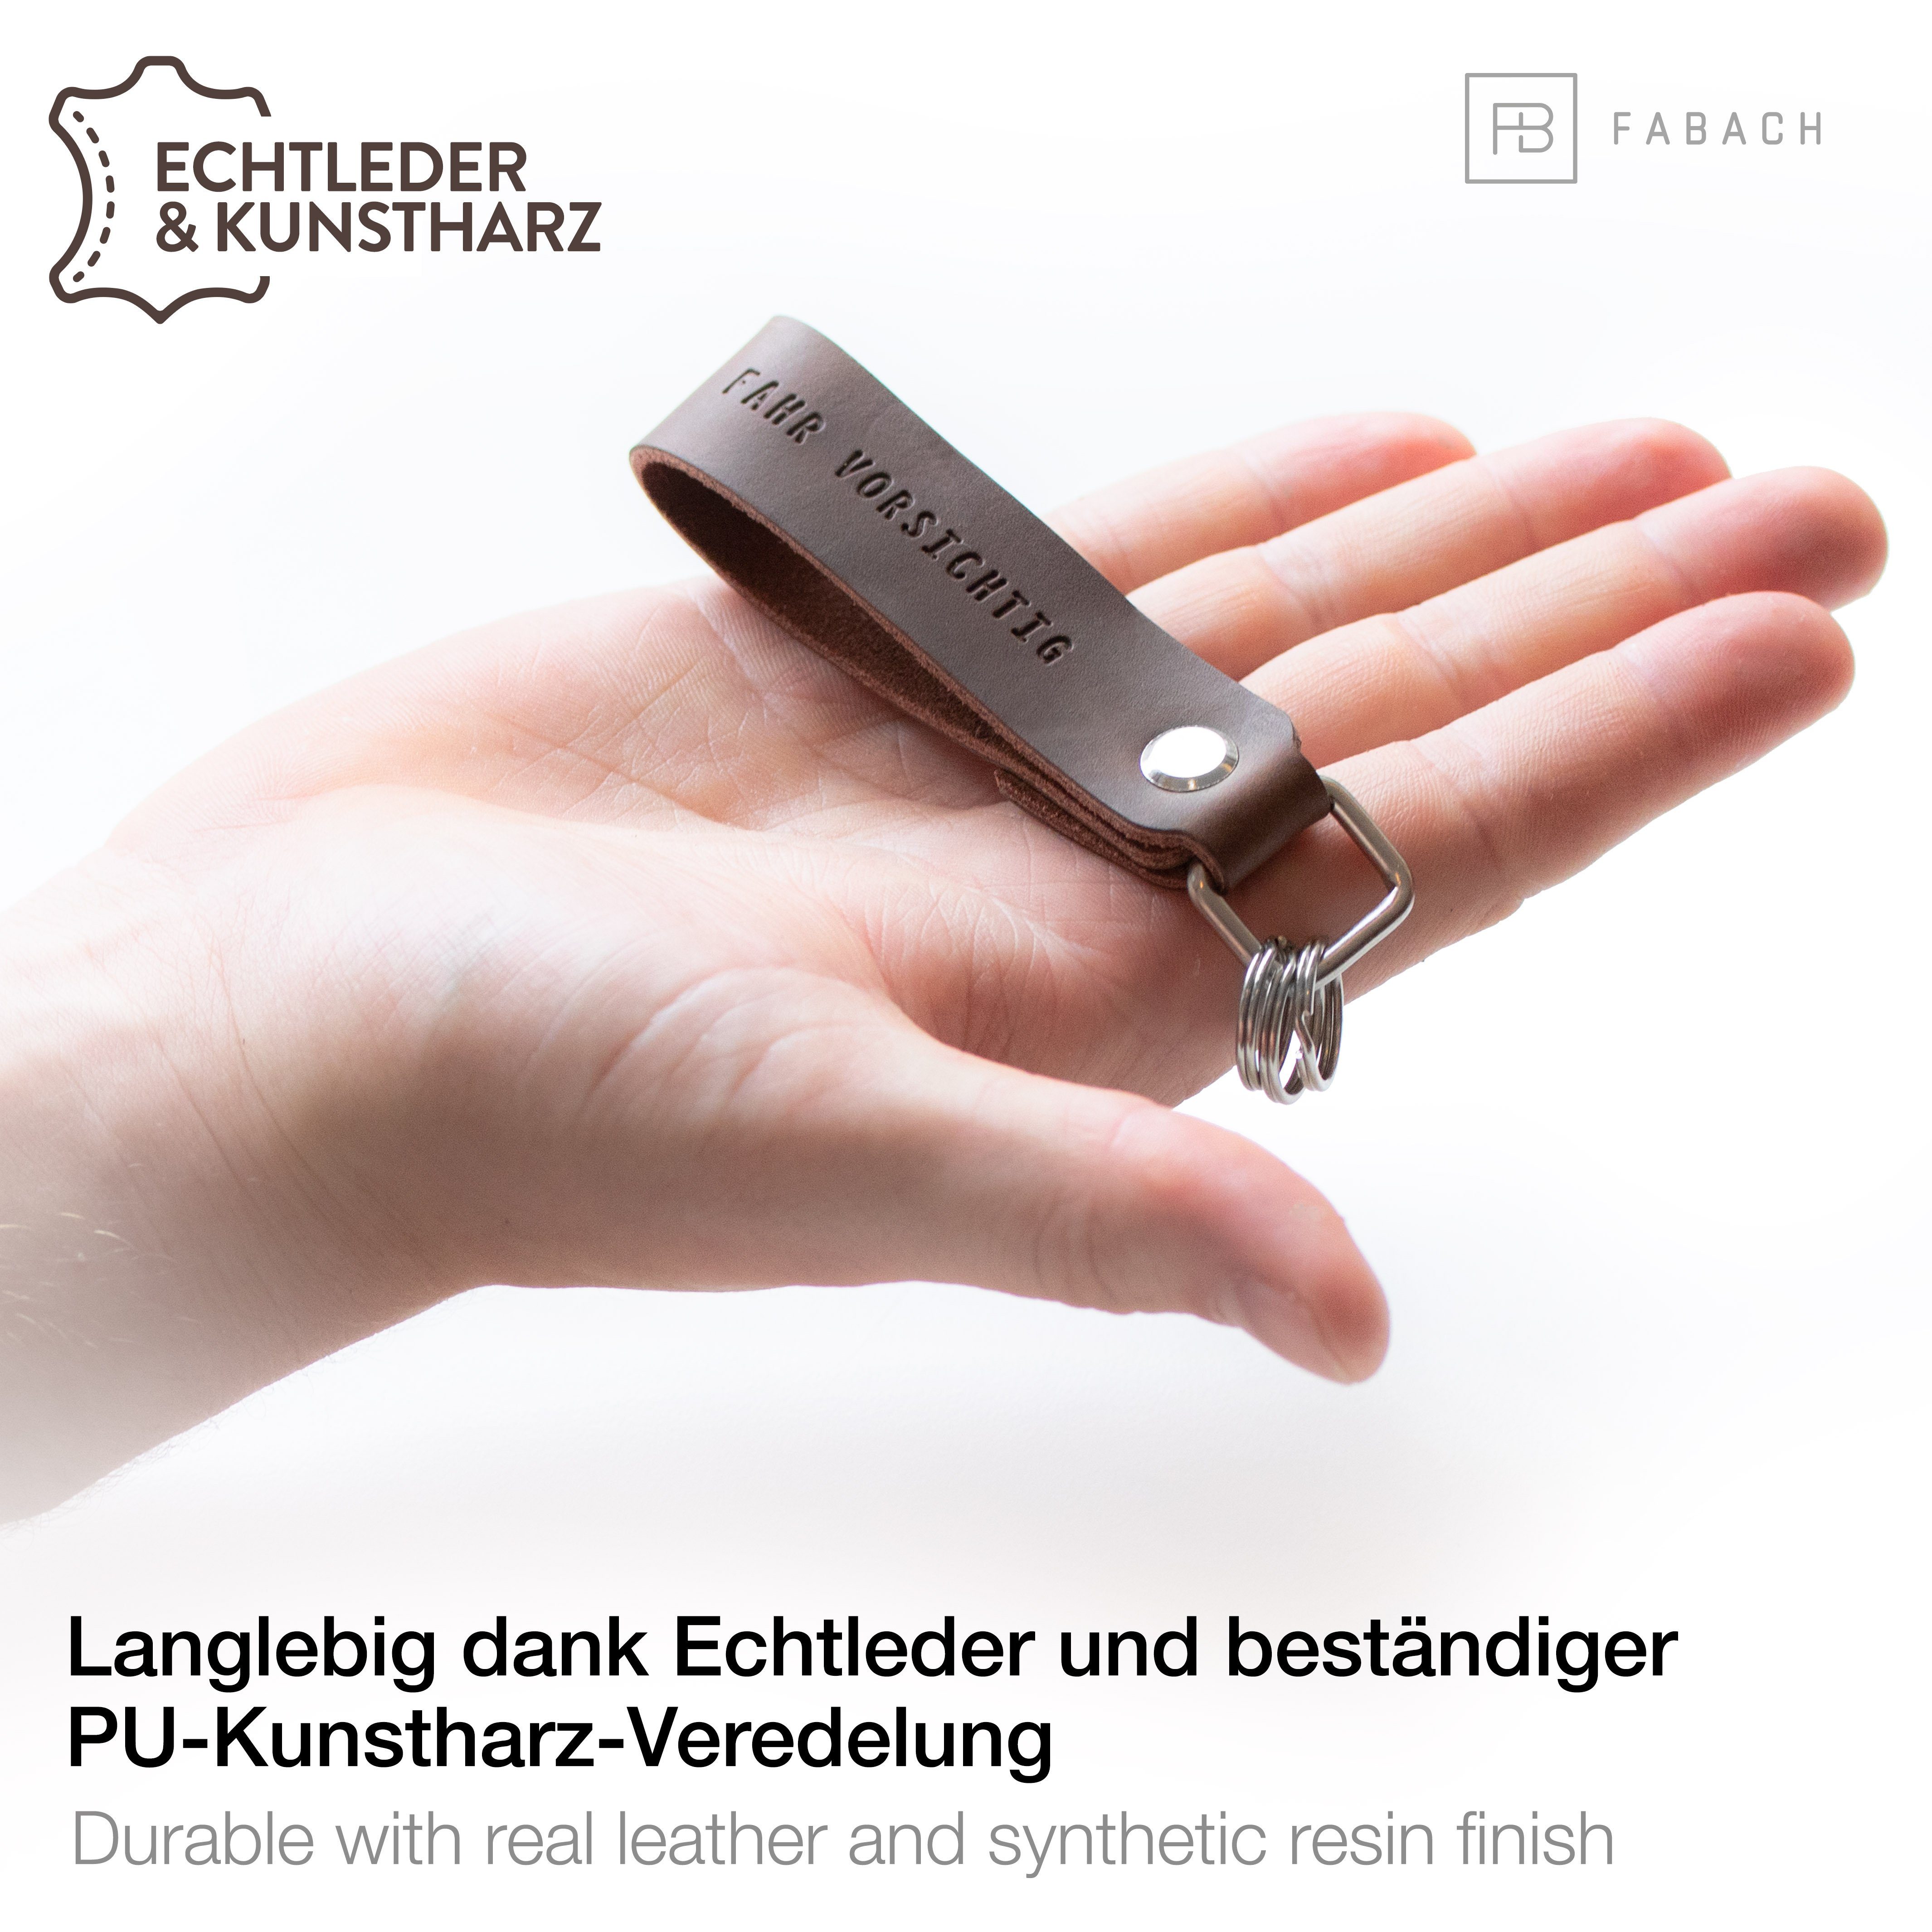 FABACH Schlüsselanhänger Leder Anhänger wechselbarer Schlüsselring - Braun Gravur "Fahr vorsichtig"